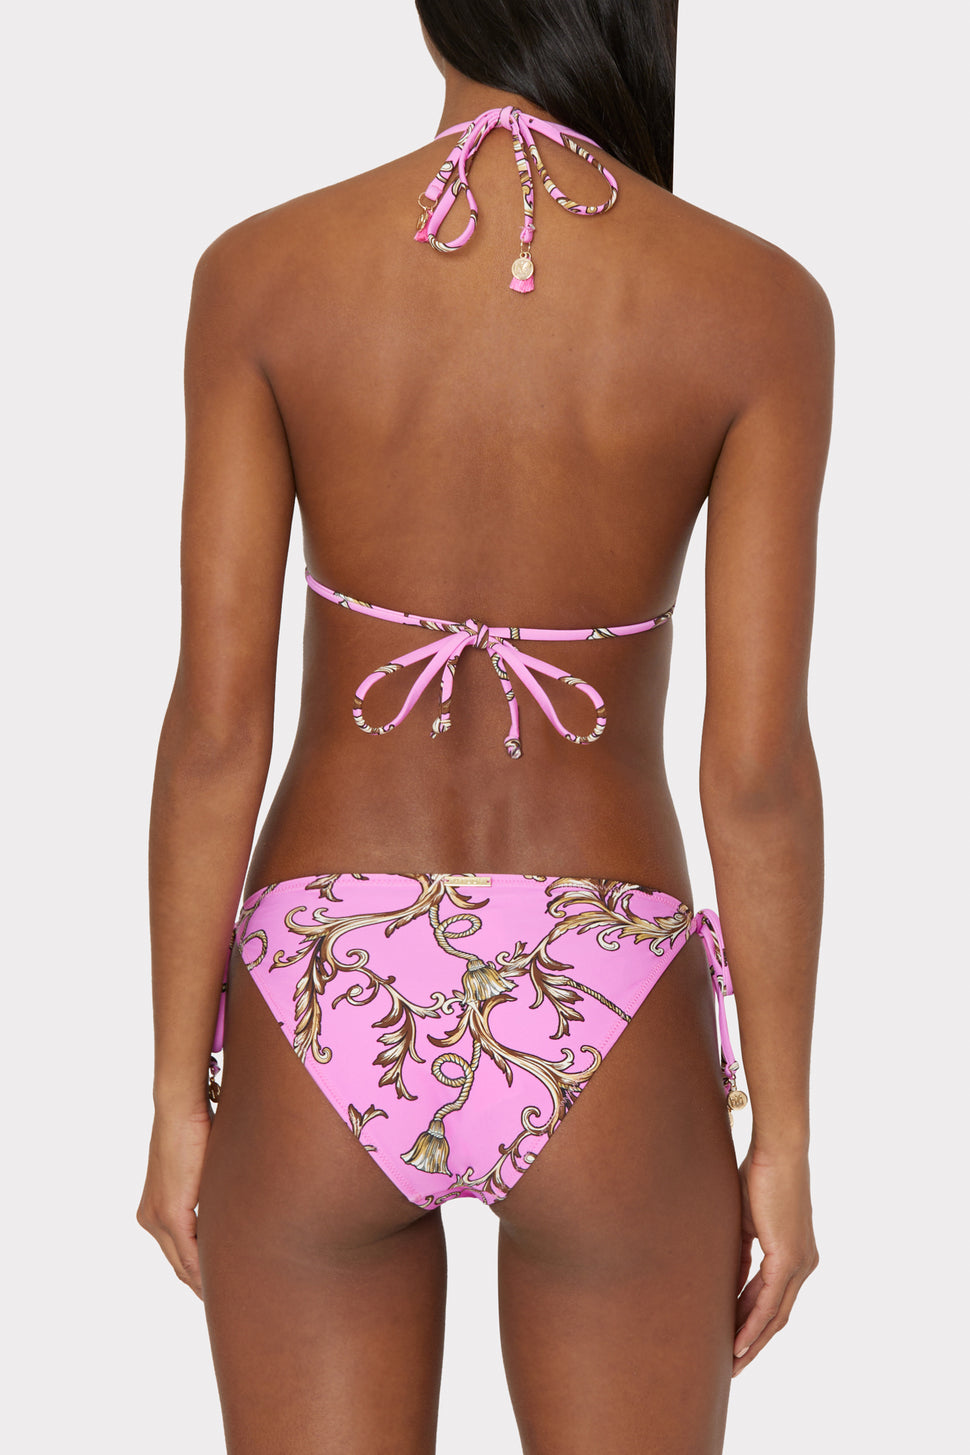 Milly Chain Print Bikini Top In Pink Multi - MILLY in Pink Multi